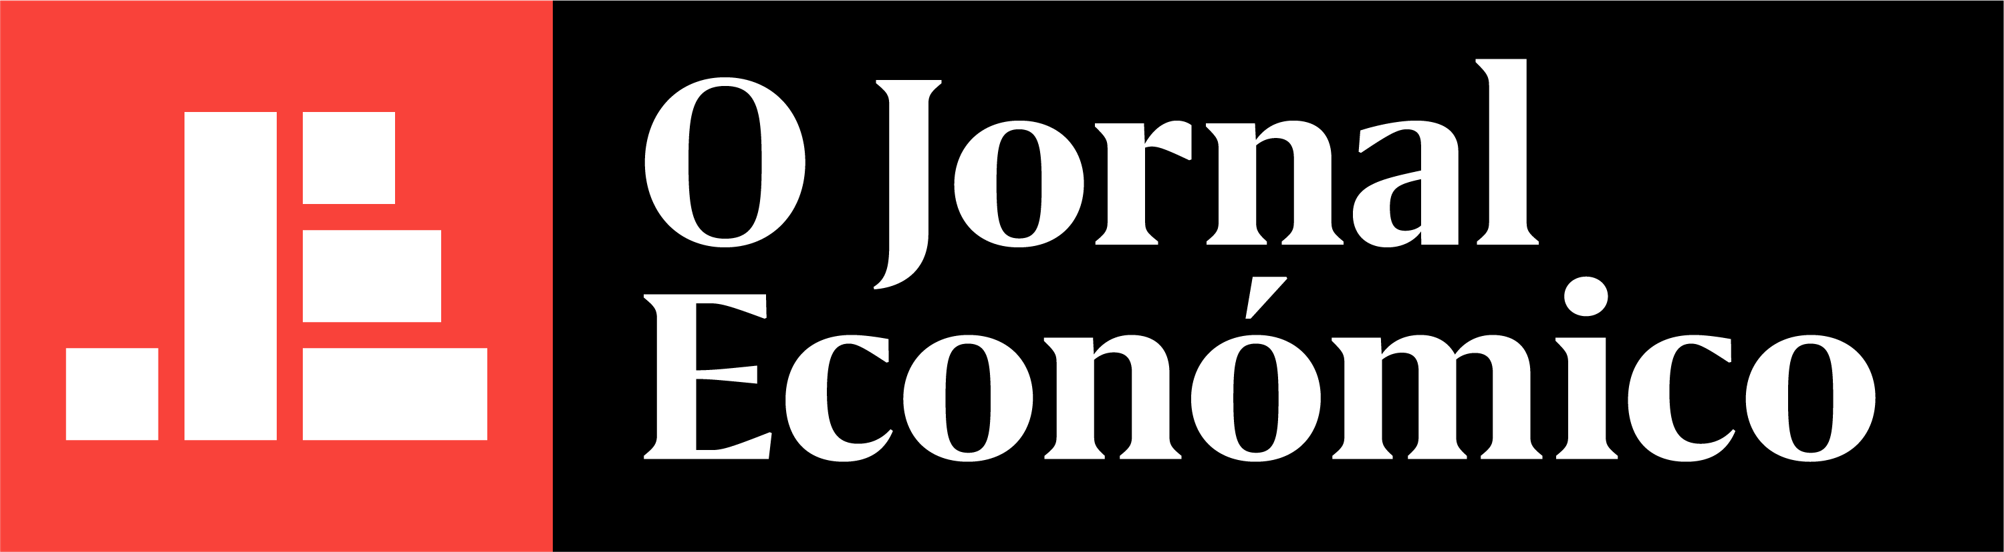 JE logo horizontal